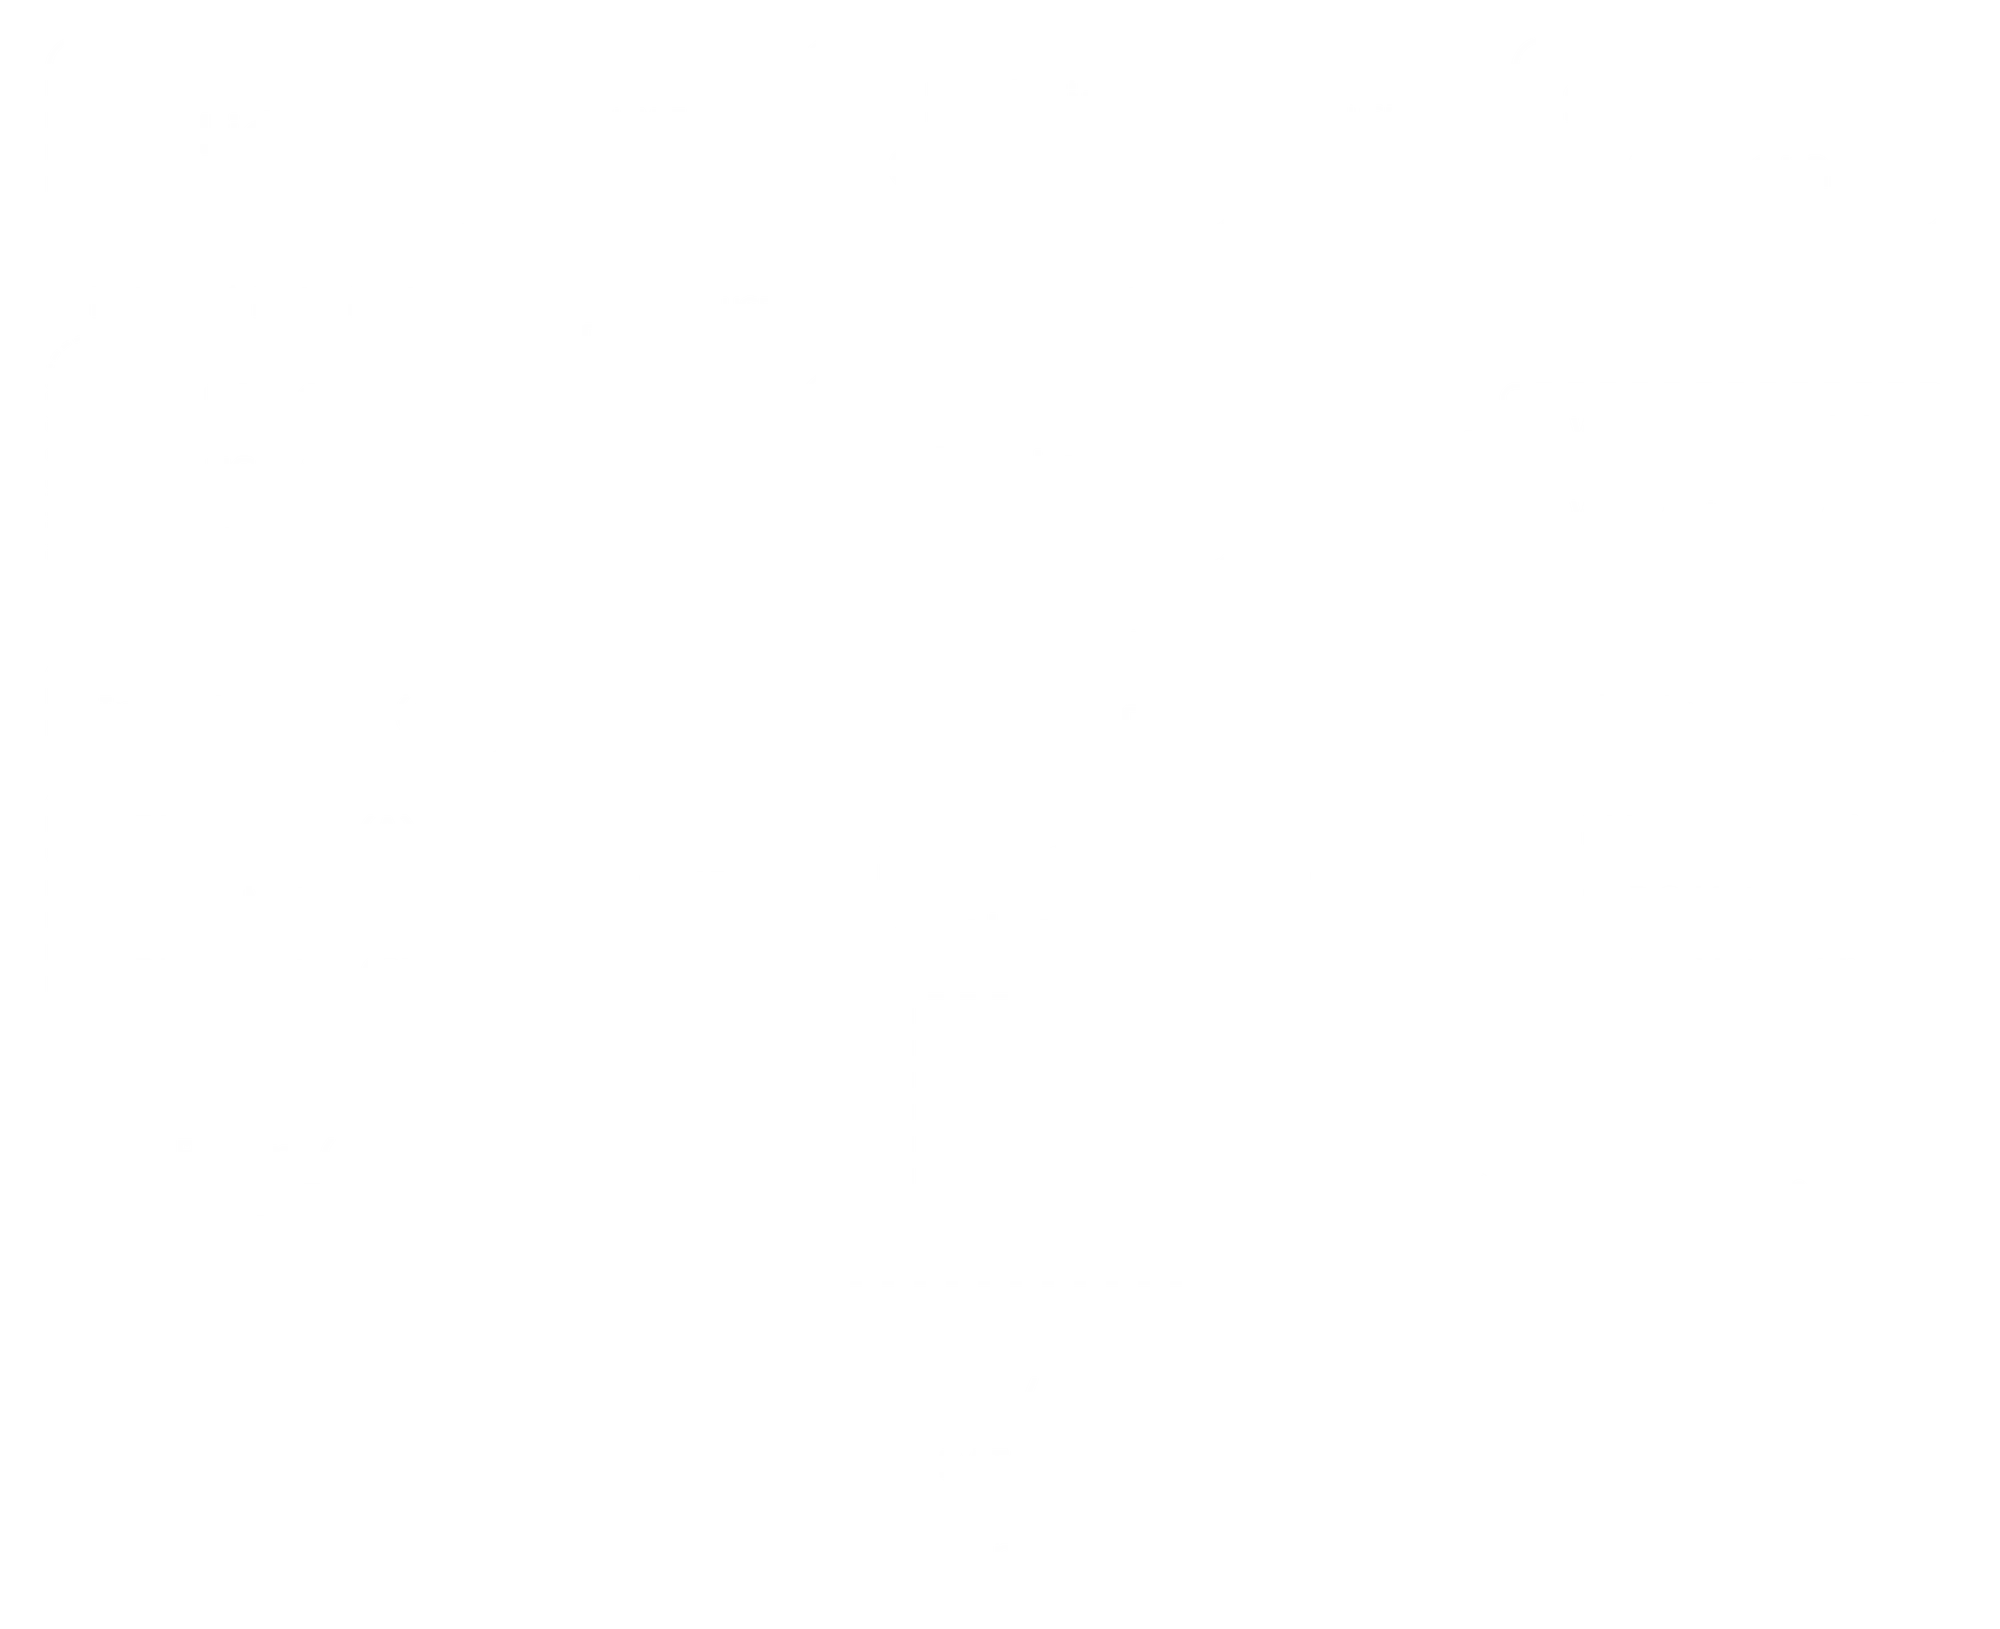 Hardware diagram of Rapha Rover